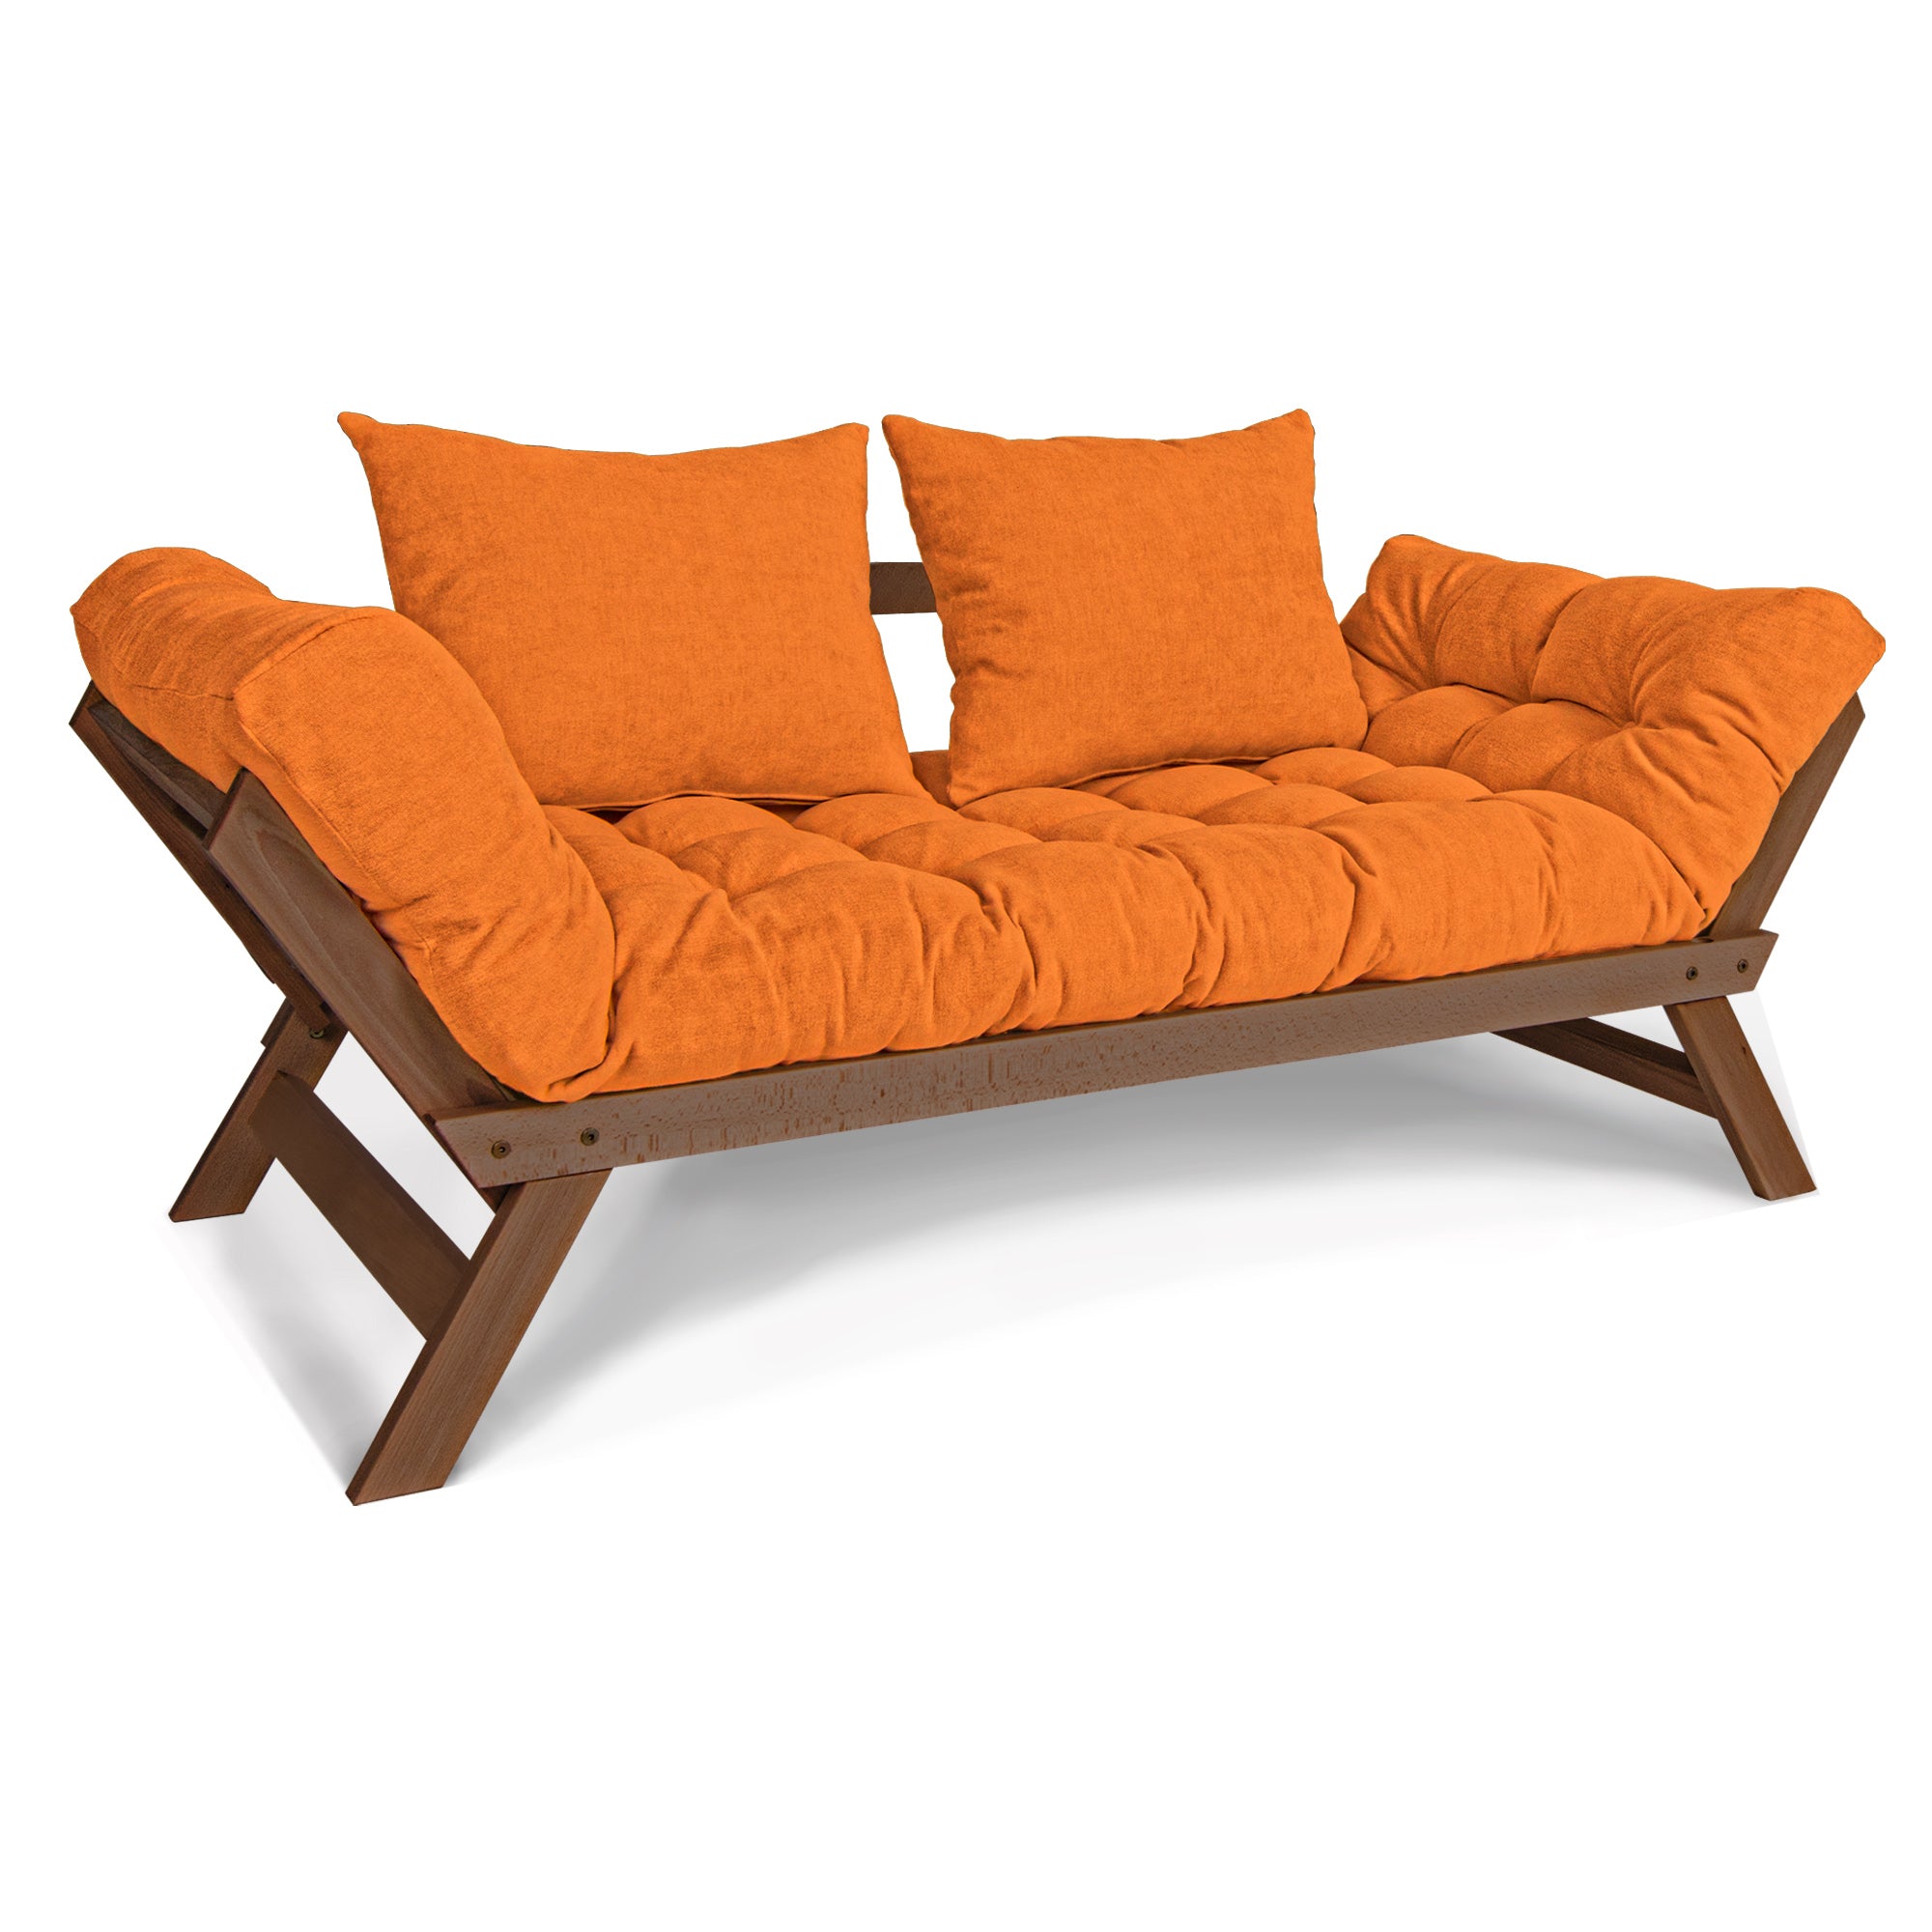 ALLEGRO Folding Sofa Bed, Beech Wood Frame, Walnut Colour upholstery orange